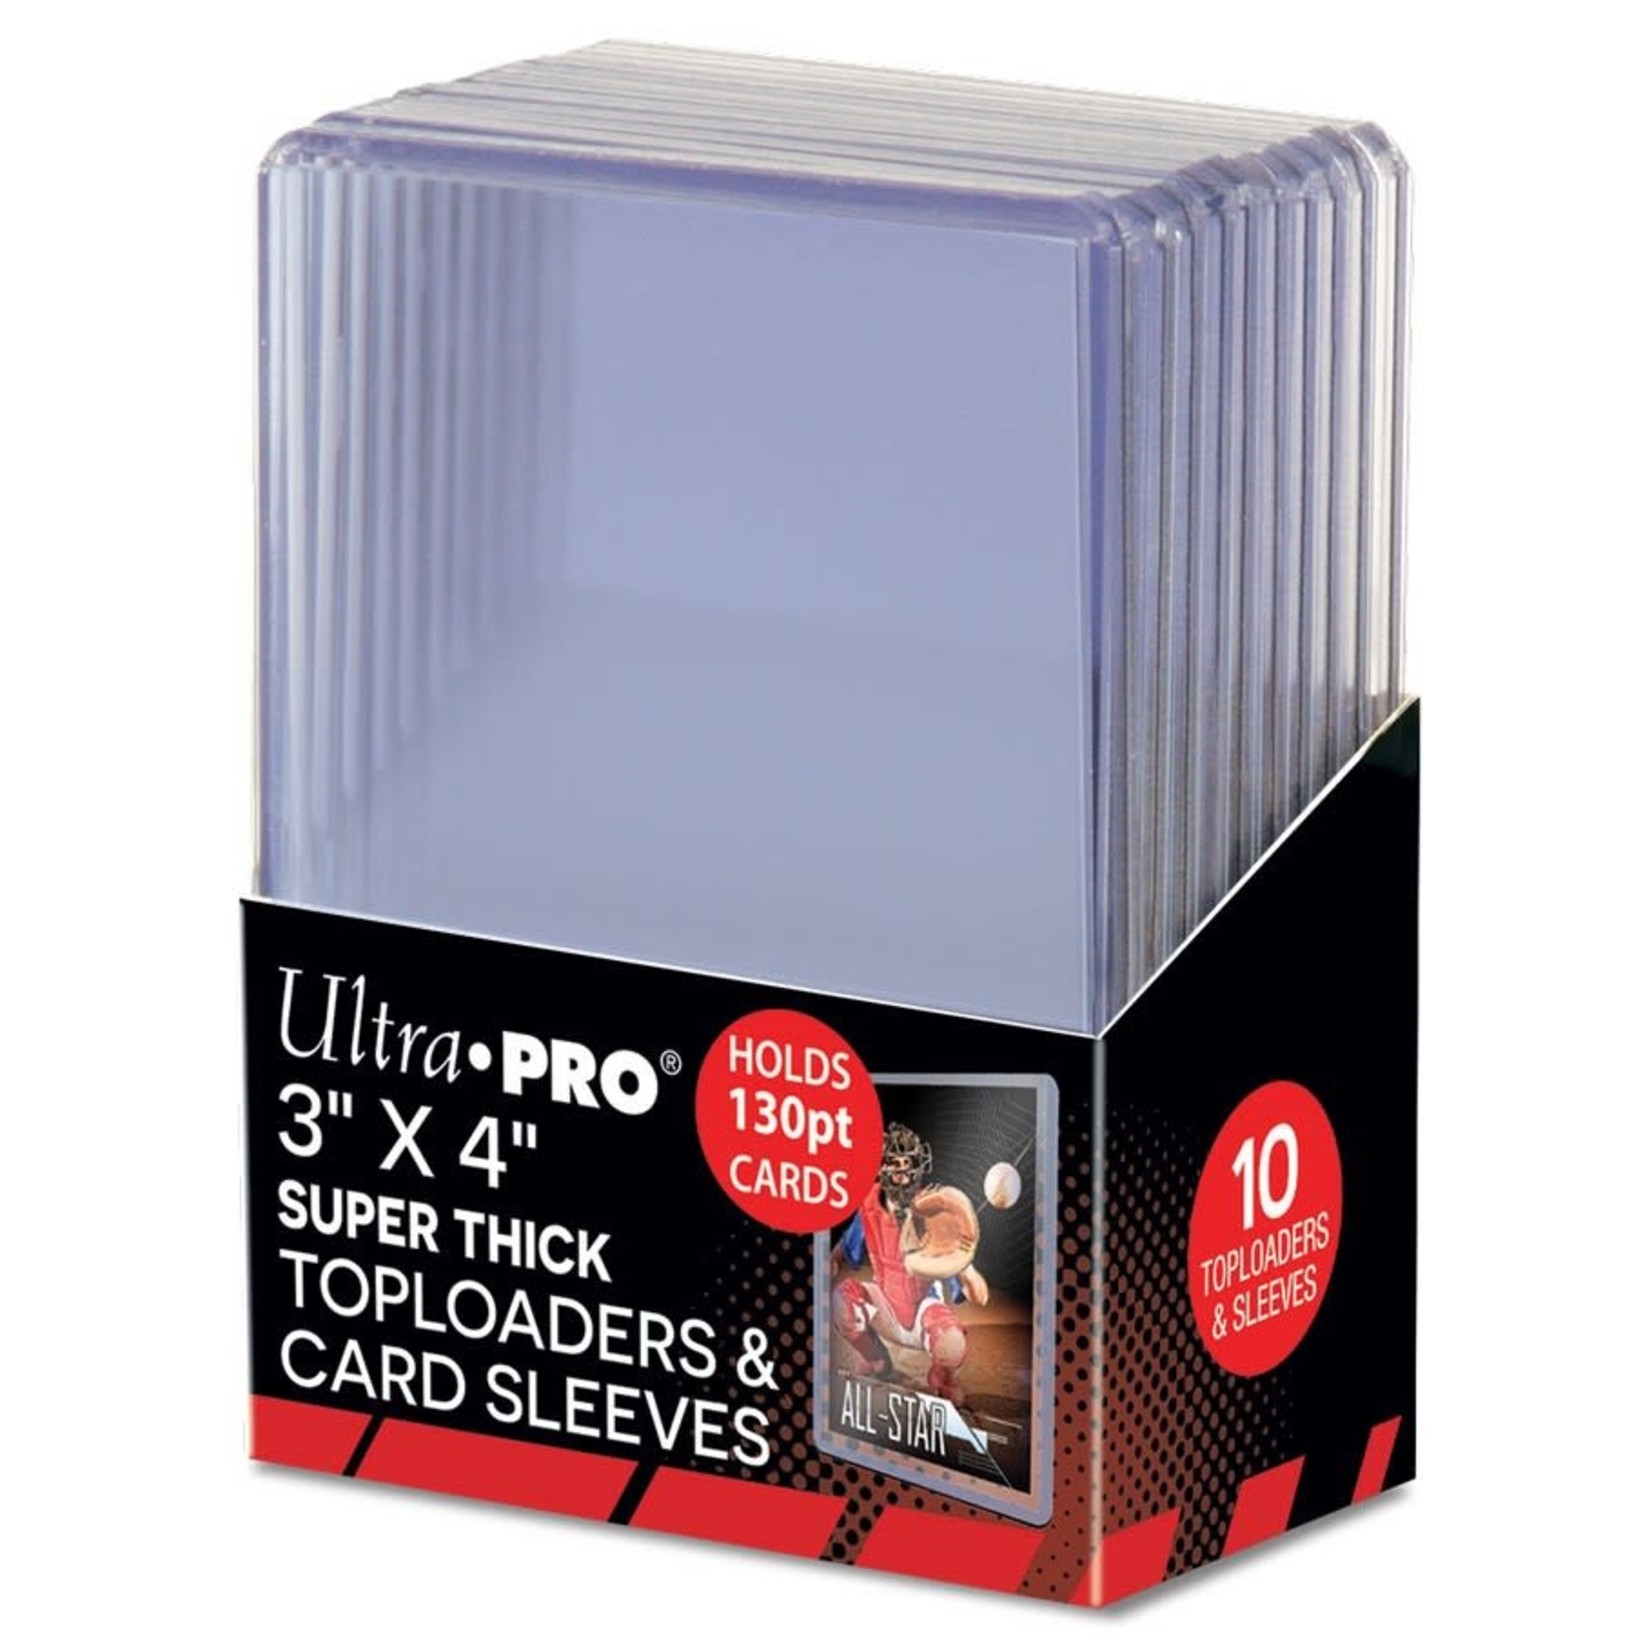 Ultra Pro TopLoader 3"" x 4" 130PT Super Thick, 10 ct.